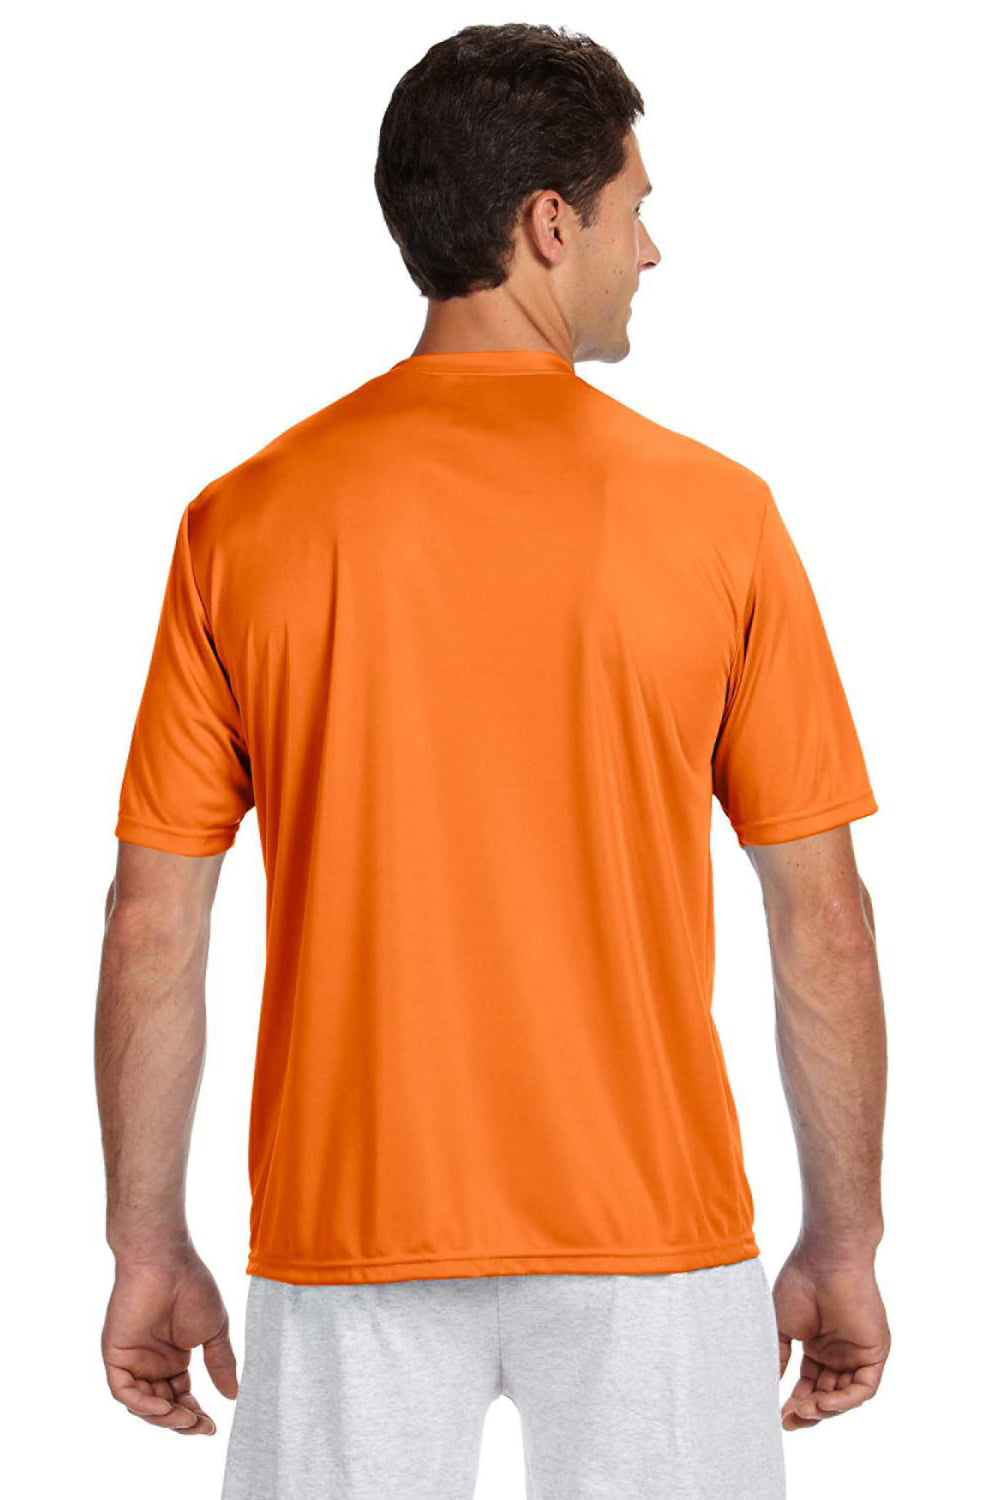 A4 N3142 Mens Performance Moisture Wicking Short Sleeve Crewneck T-Shirt Safety Orange Model Back